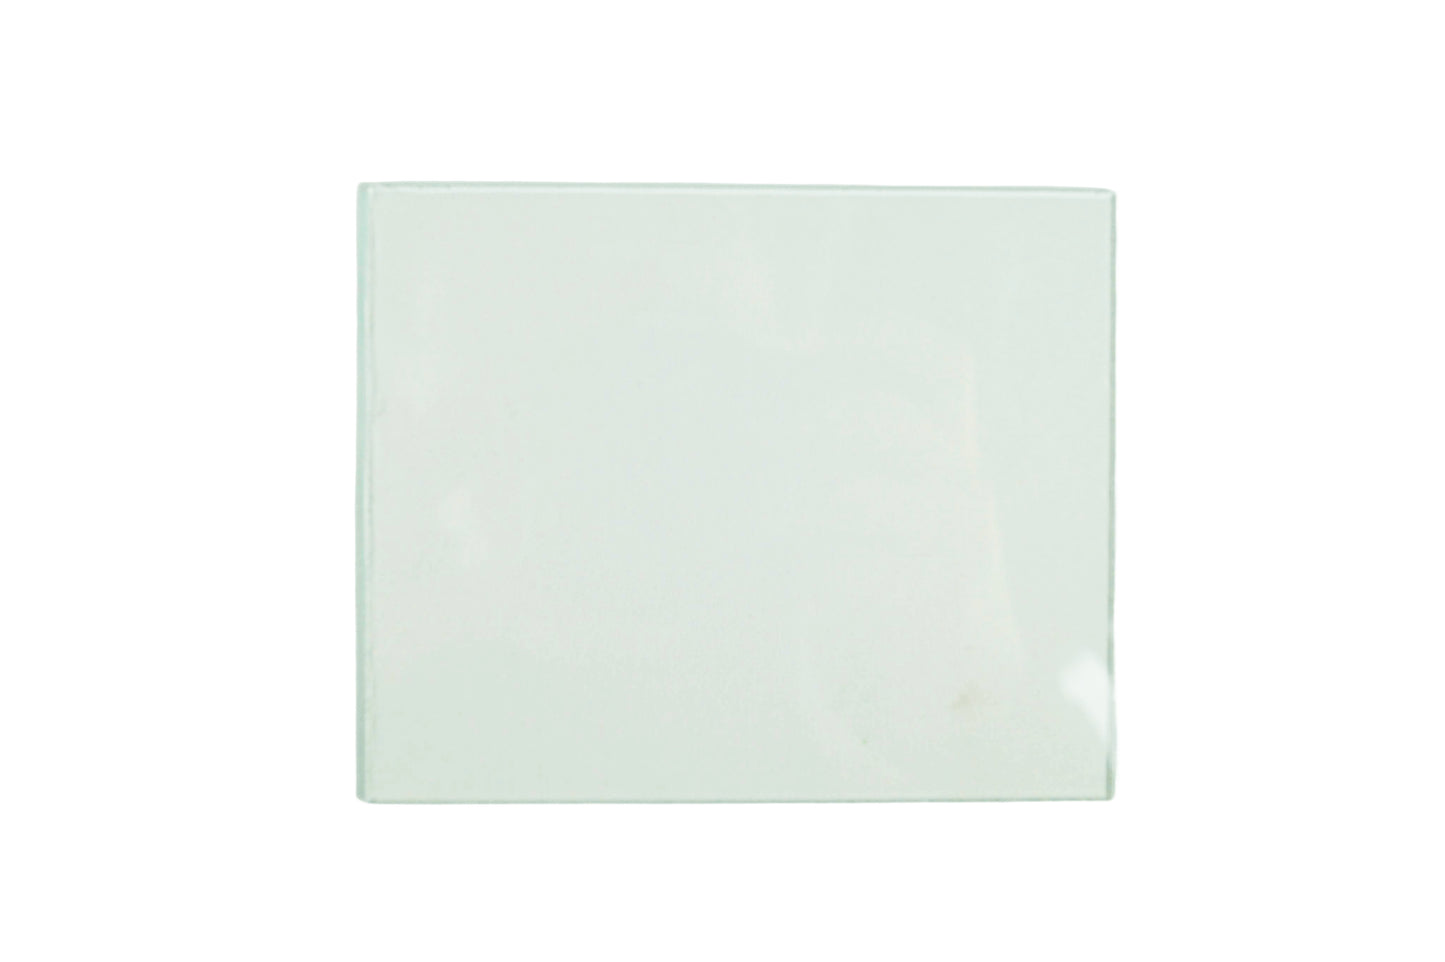 Vorsatzglas farblos 90x110 mm - 10er Pack